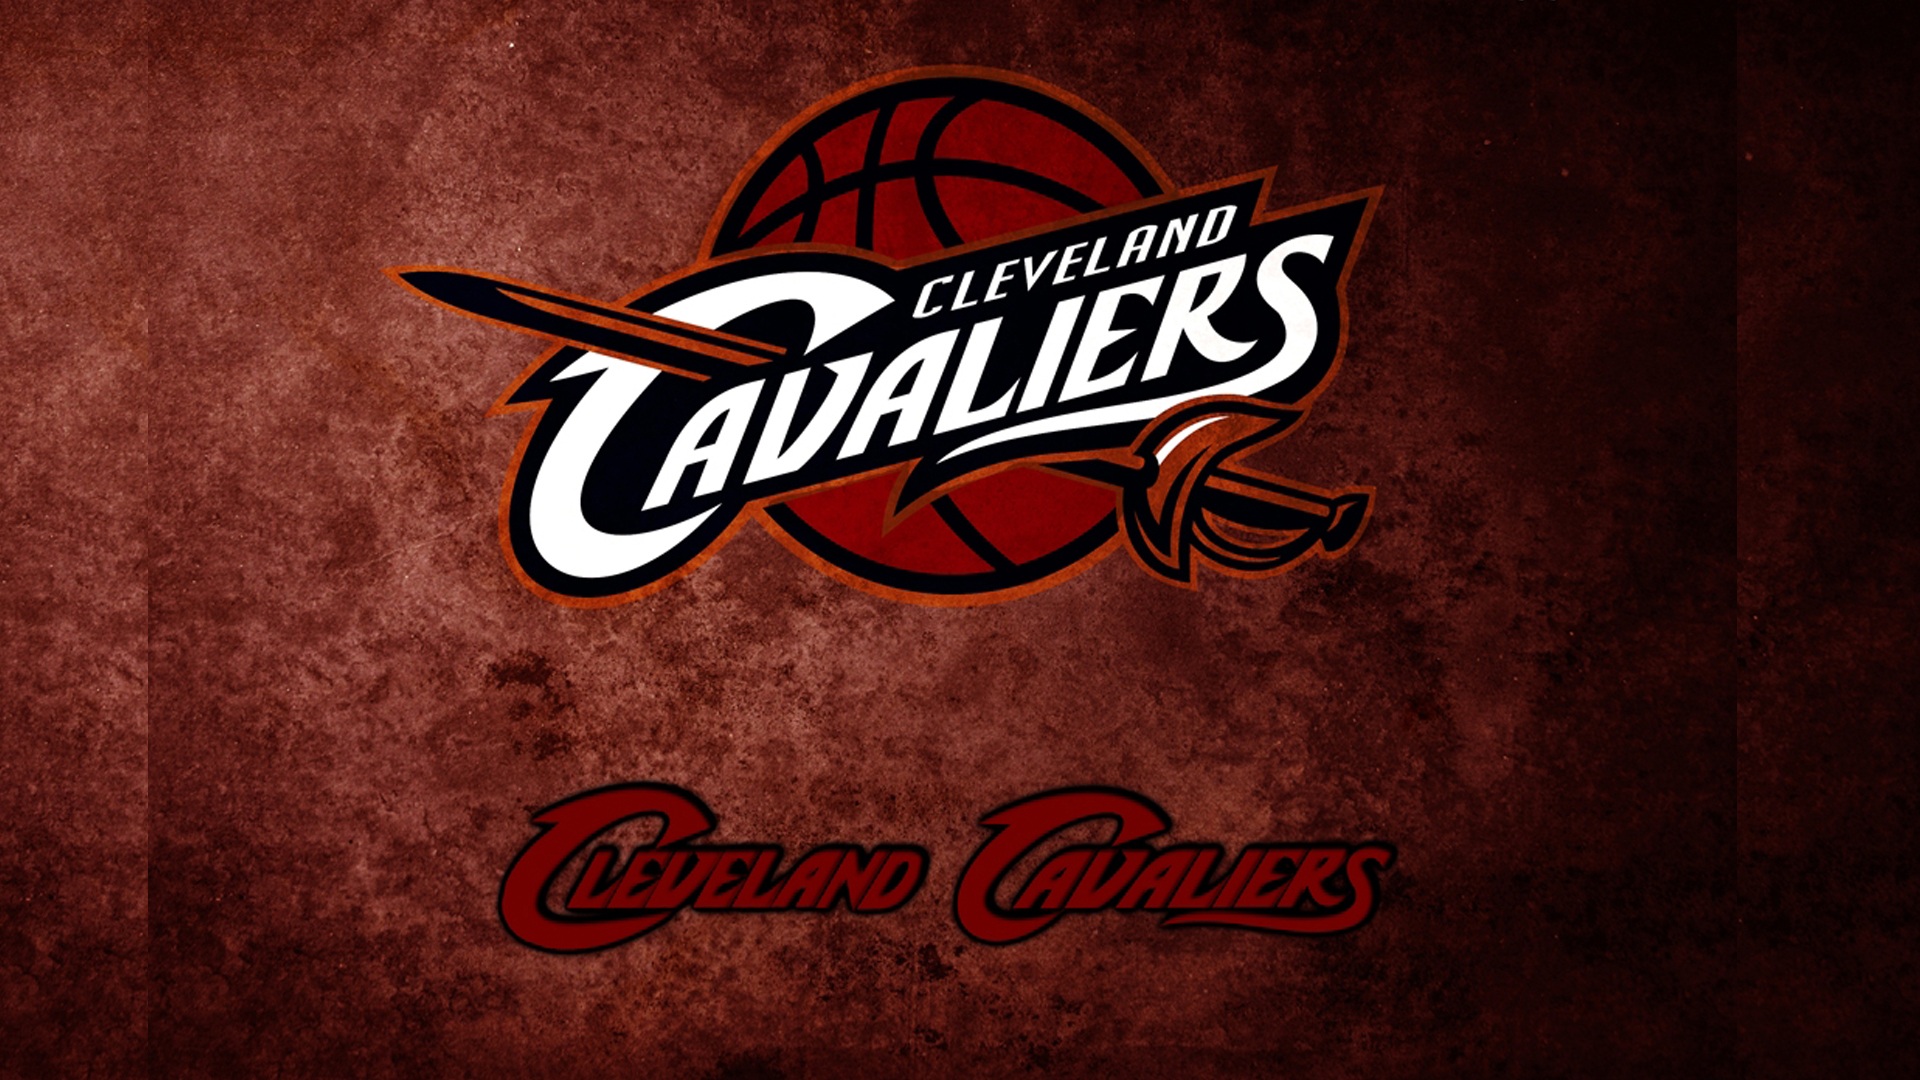 2015 Cleveland Cavaliers Wallpaper Wallpapersafari HD Wallpapers Download Free Map Images Wallpaper [wallpaper684.blogspot.com]